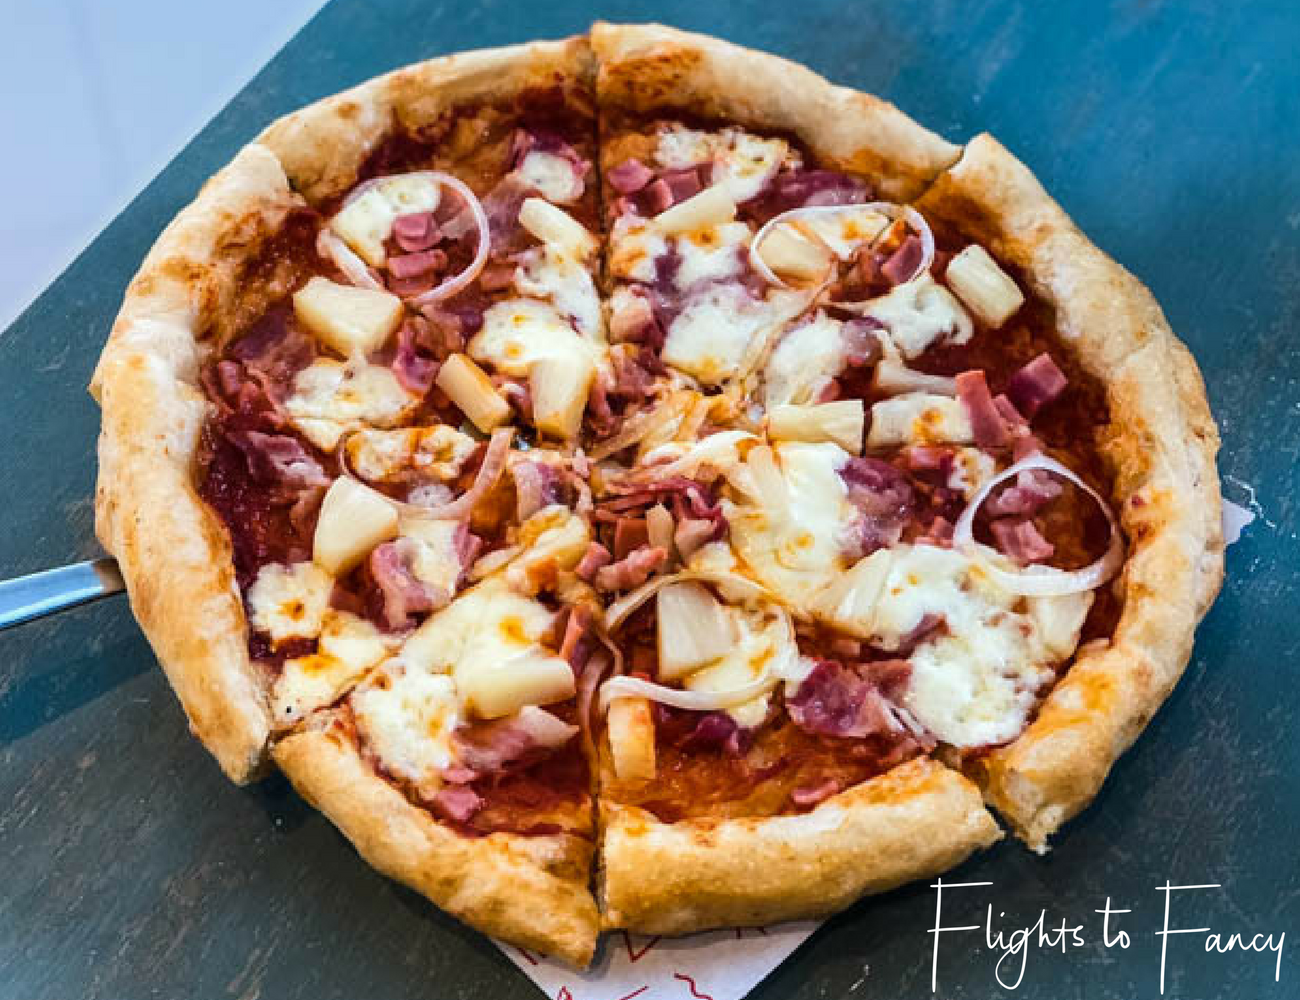 Flights To Fancy at Cha Cha's Boracay - Stone Fired Pizza